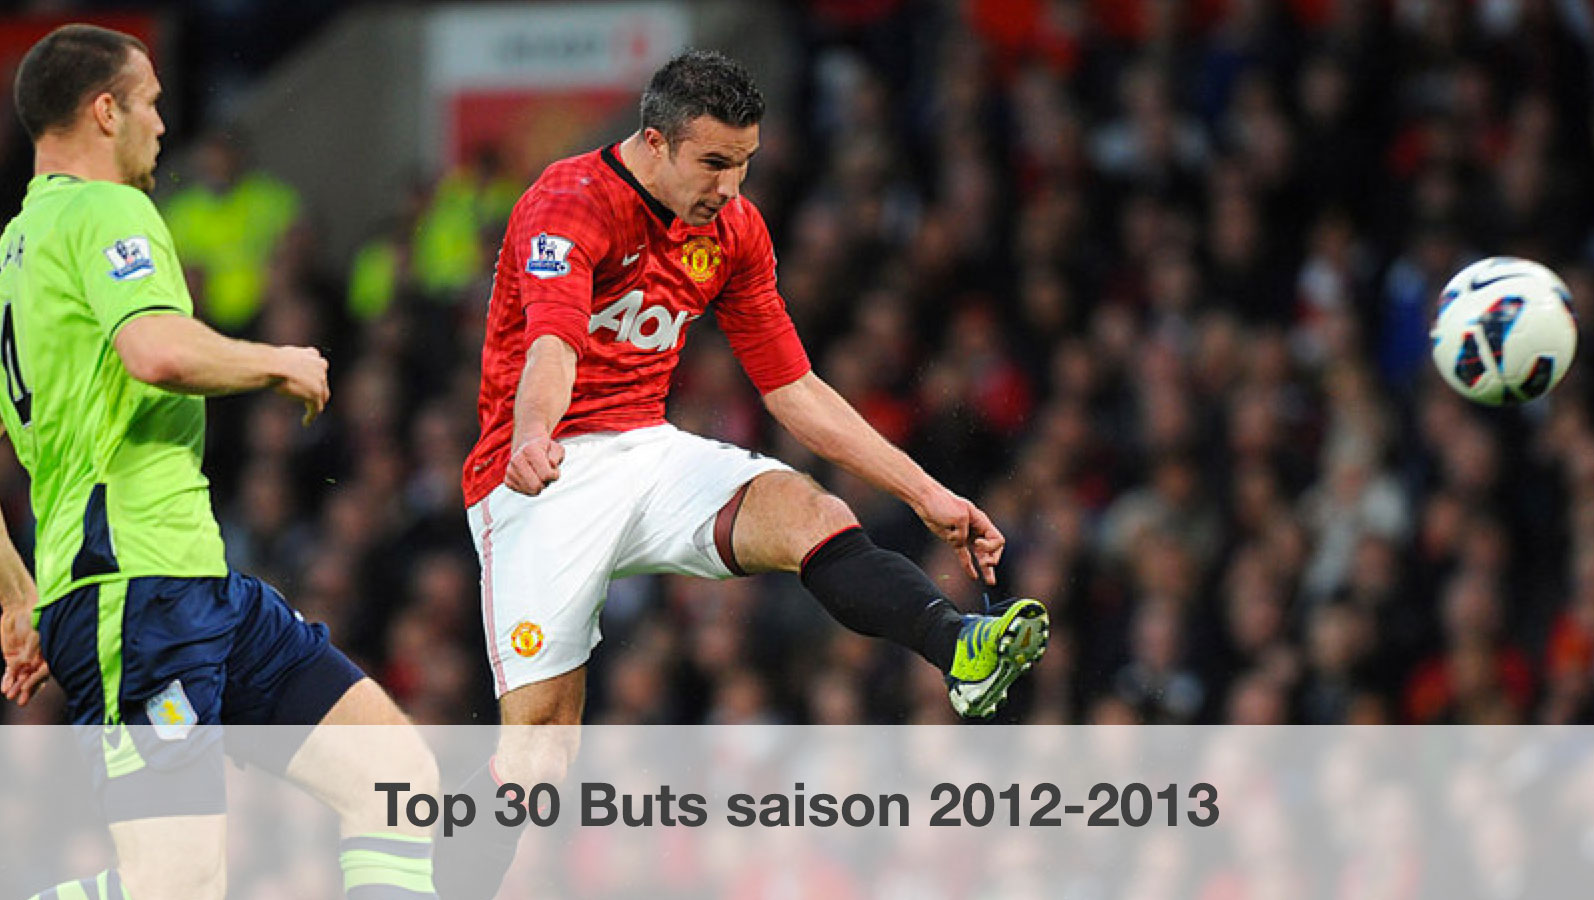 VIdeo Top 30 Buts saison 2012-2013